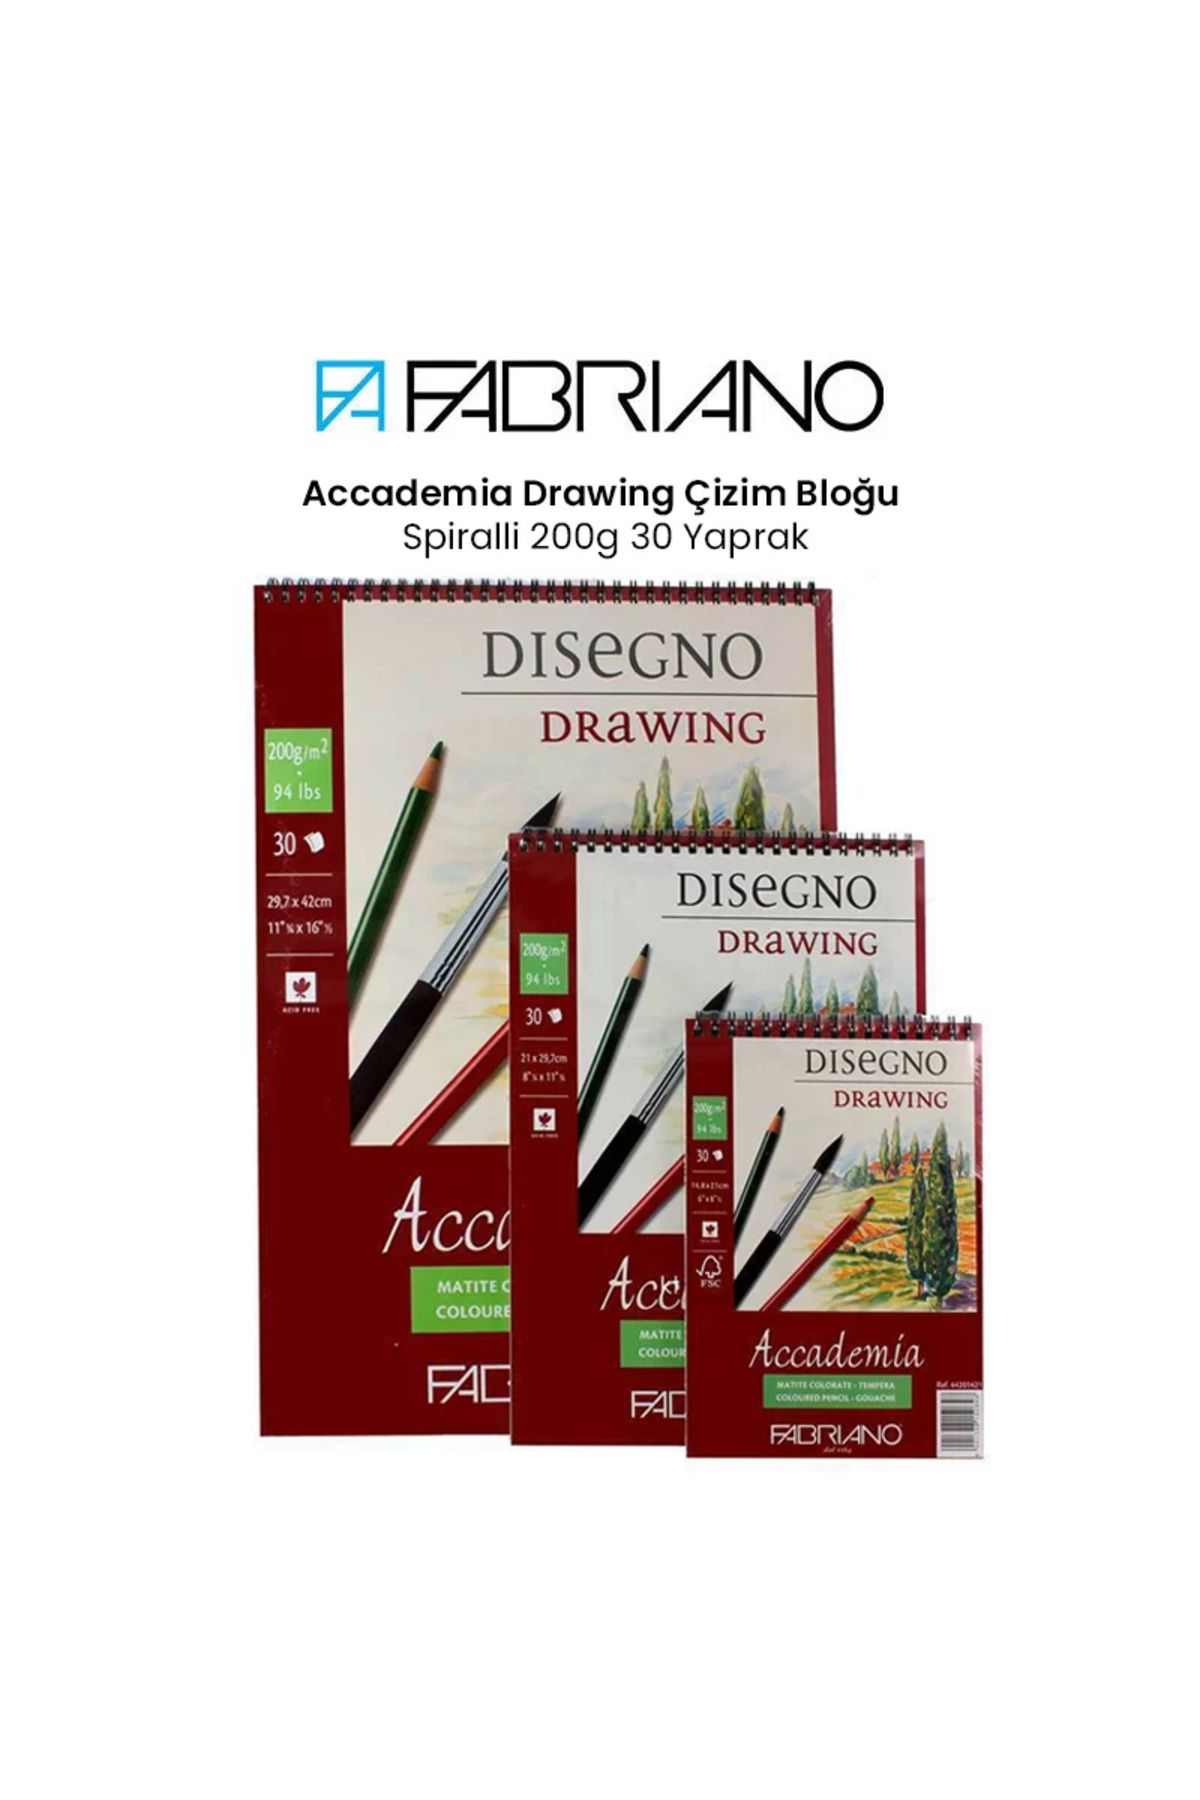 Fabriano Accademia Drawing Çizim Bloğu Spiralli 200g 30 Yaprak